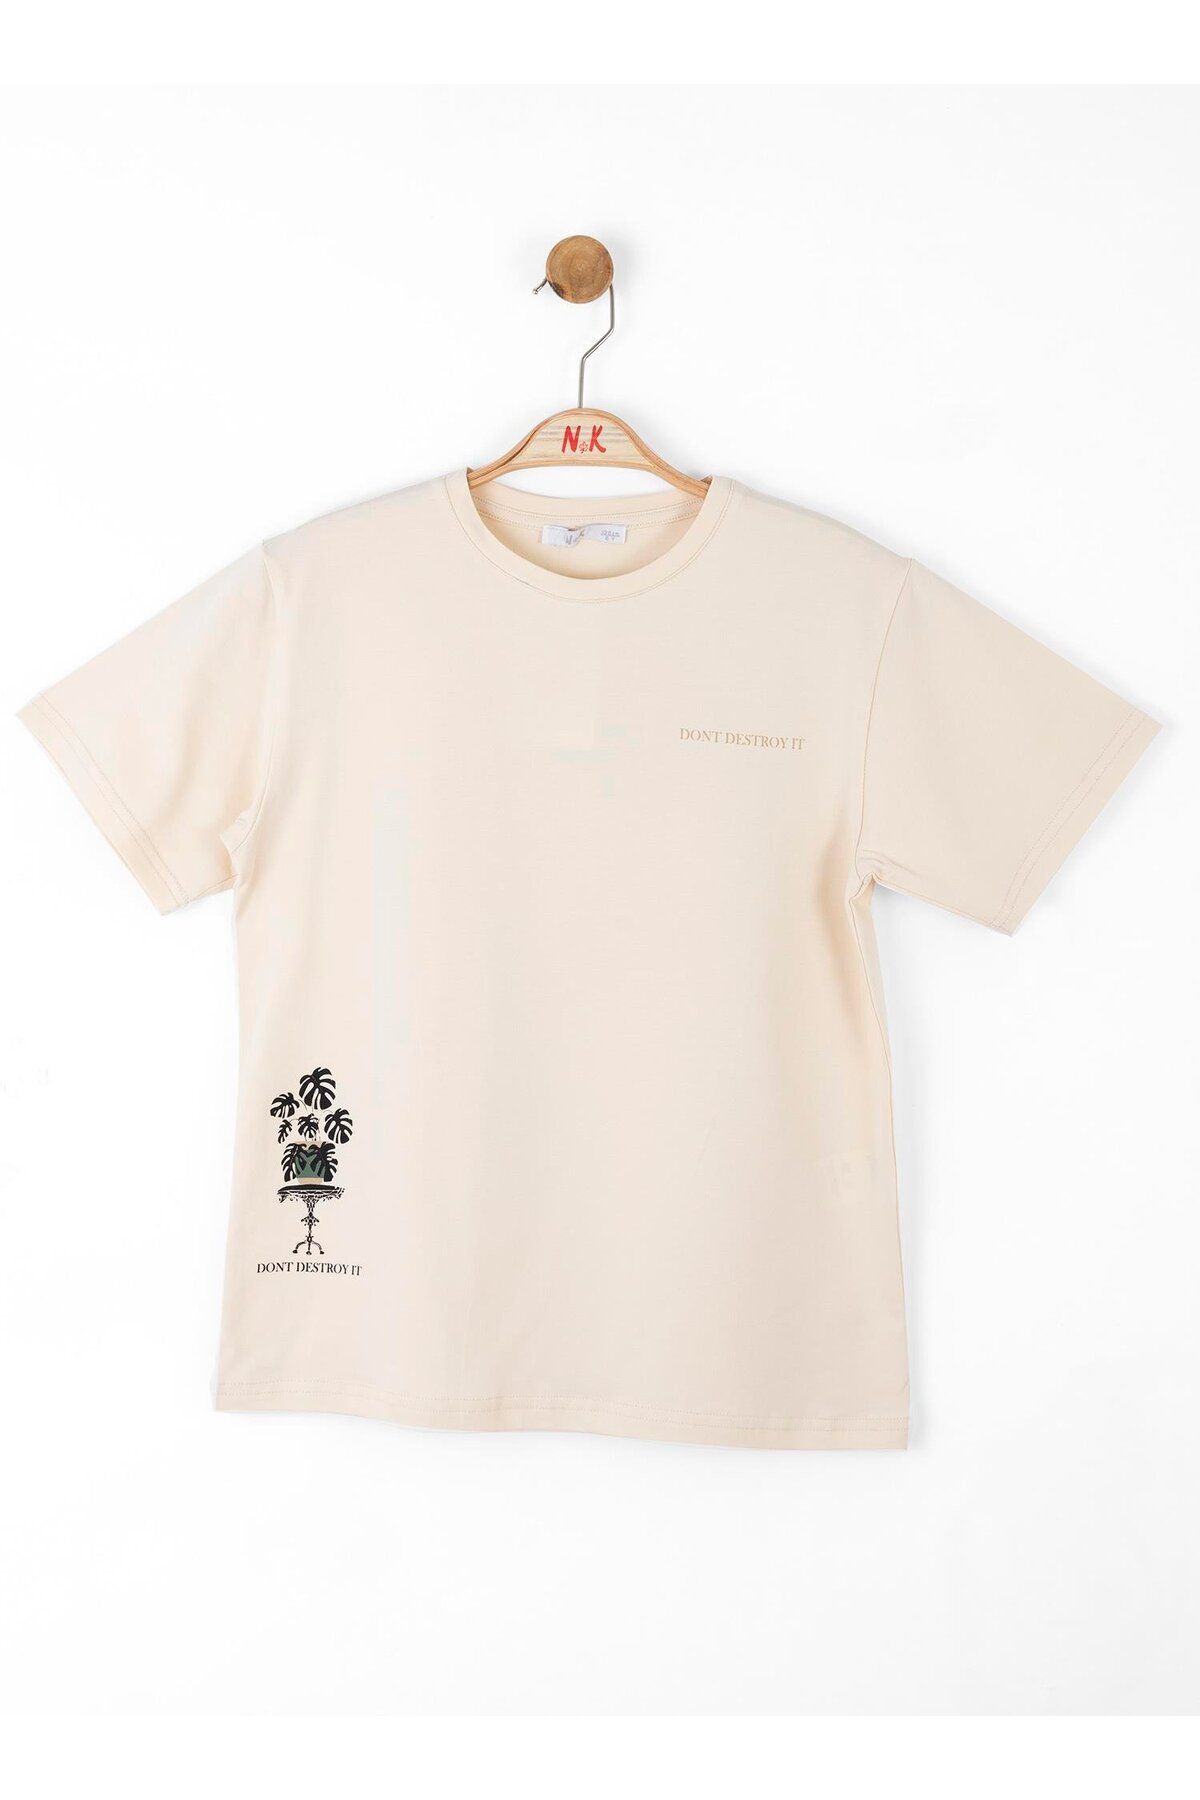 Nk Kids Others Tshirt - Cream/green 8/14